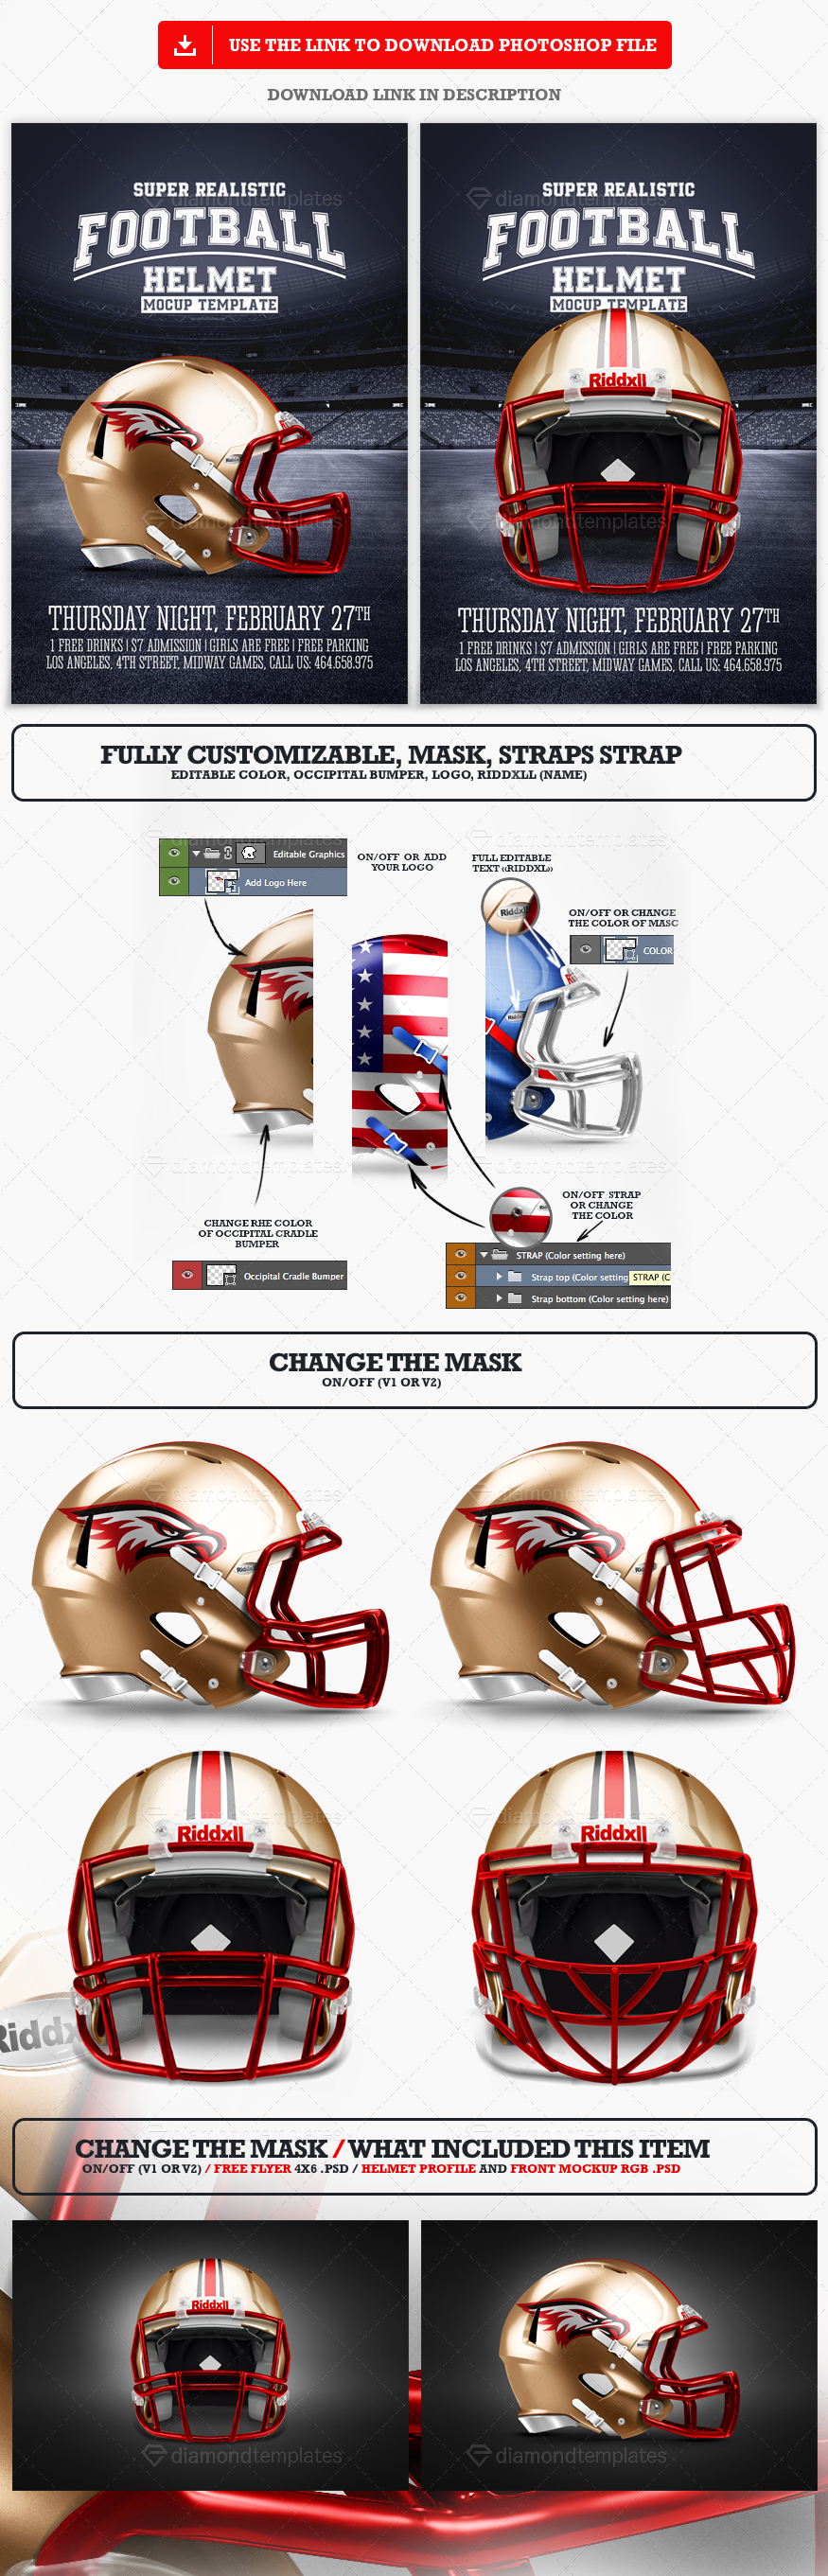 Download Realistic Football Helmet Mockup Full Customizable By Diamondtemplates On Deviantart